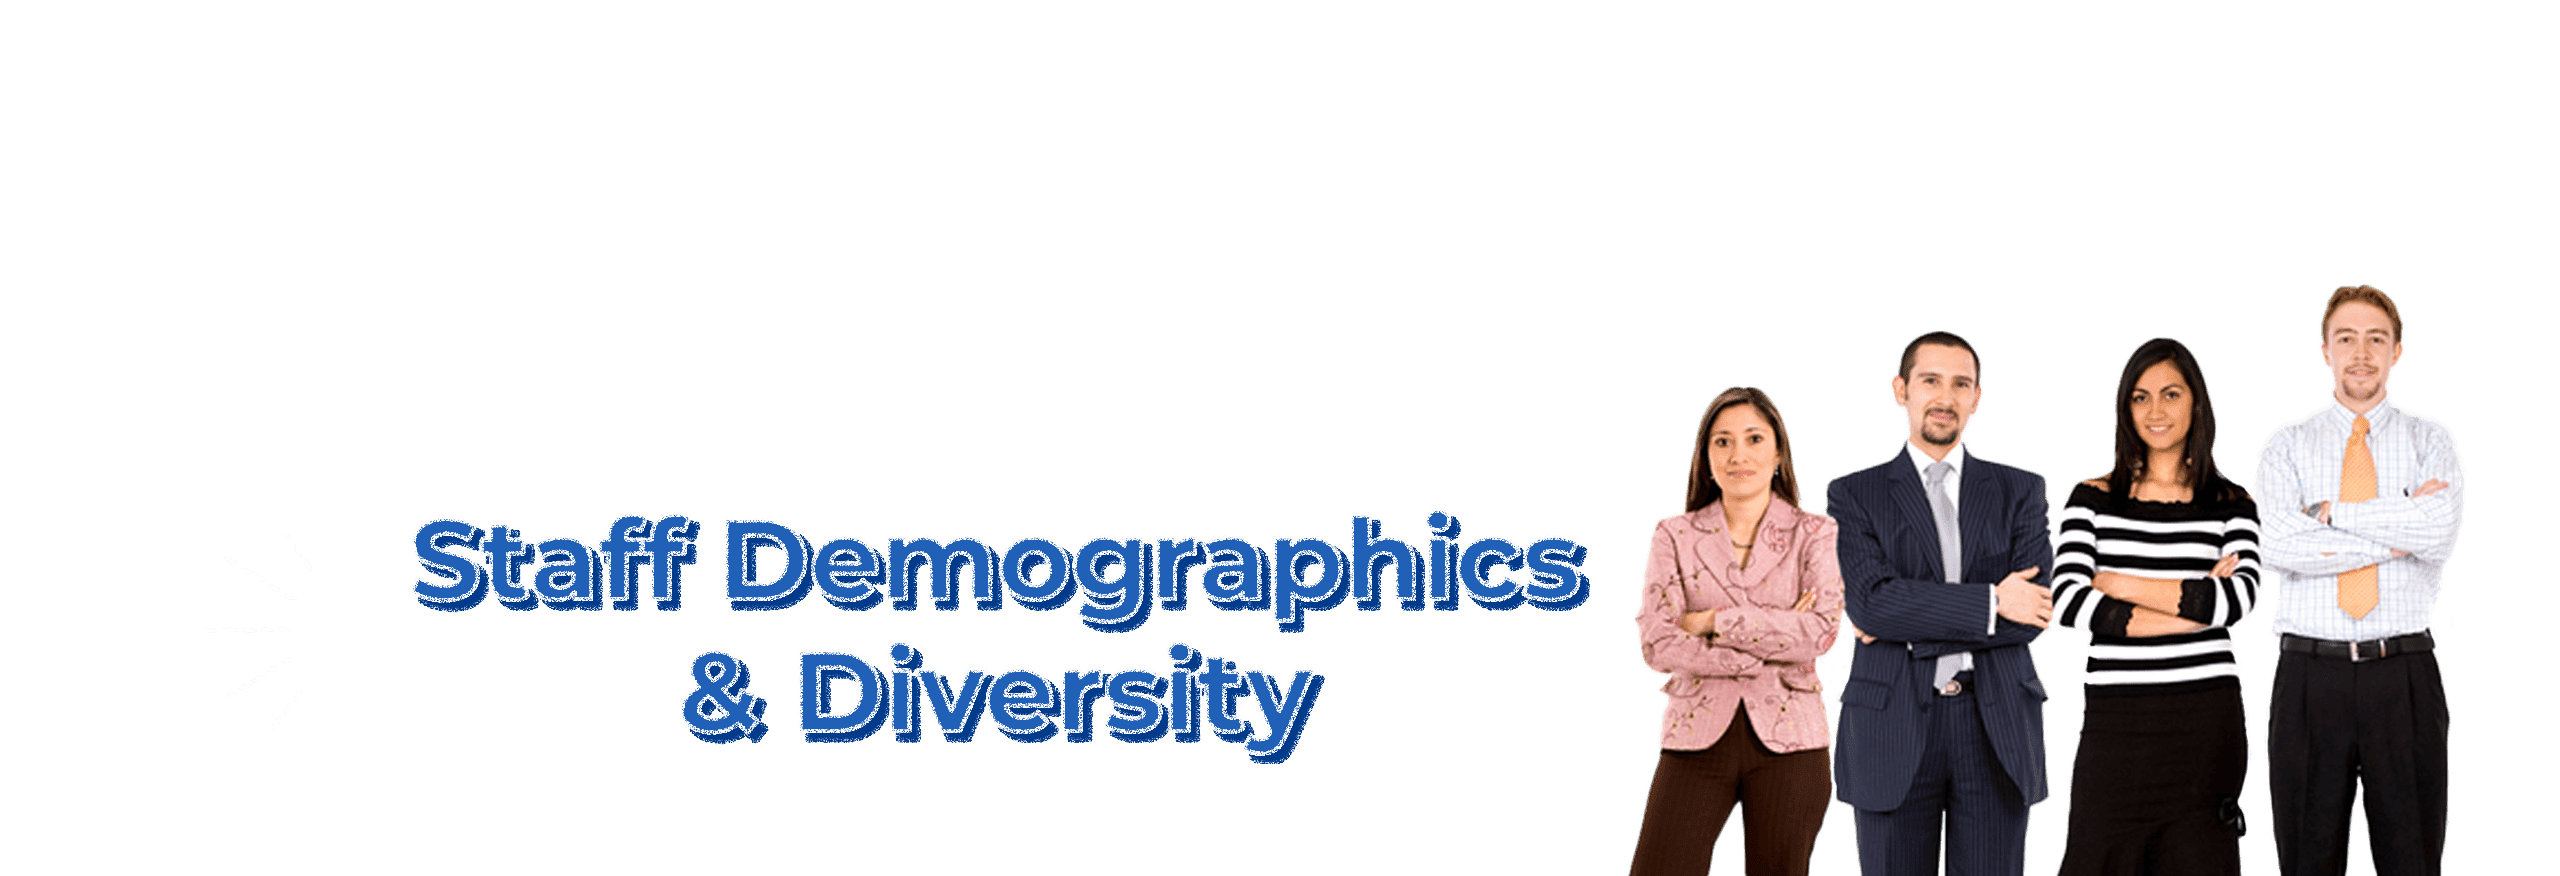 Staff Demographics & Diversity